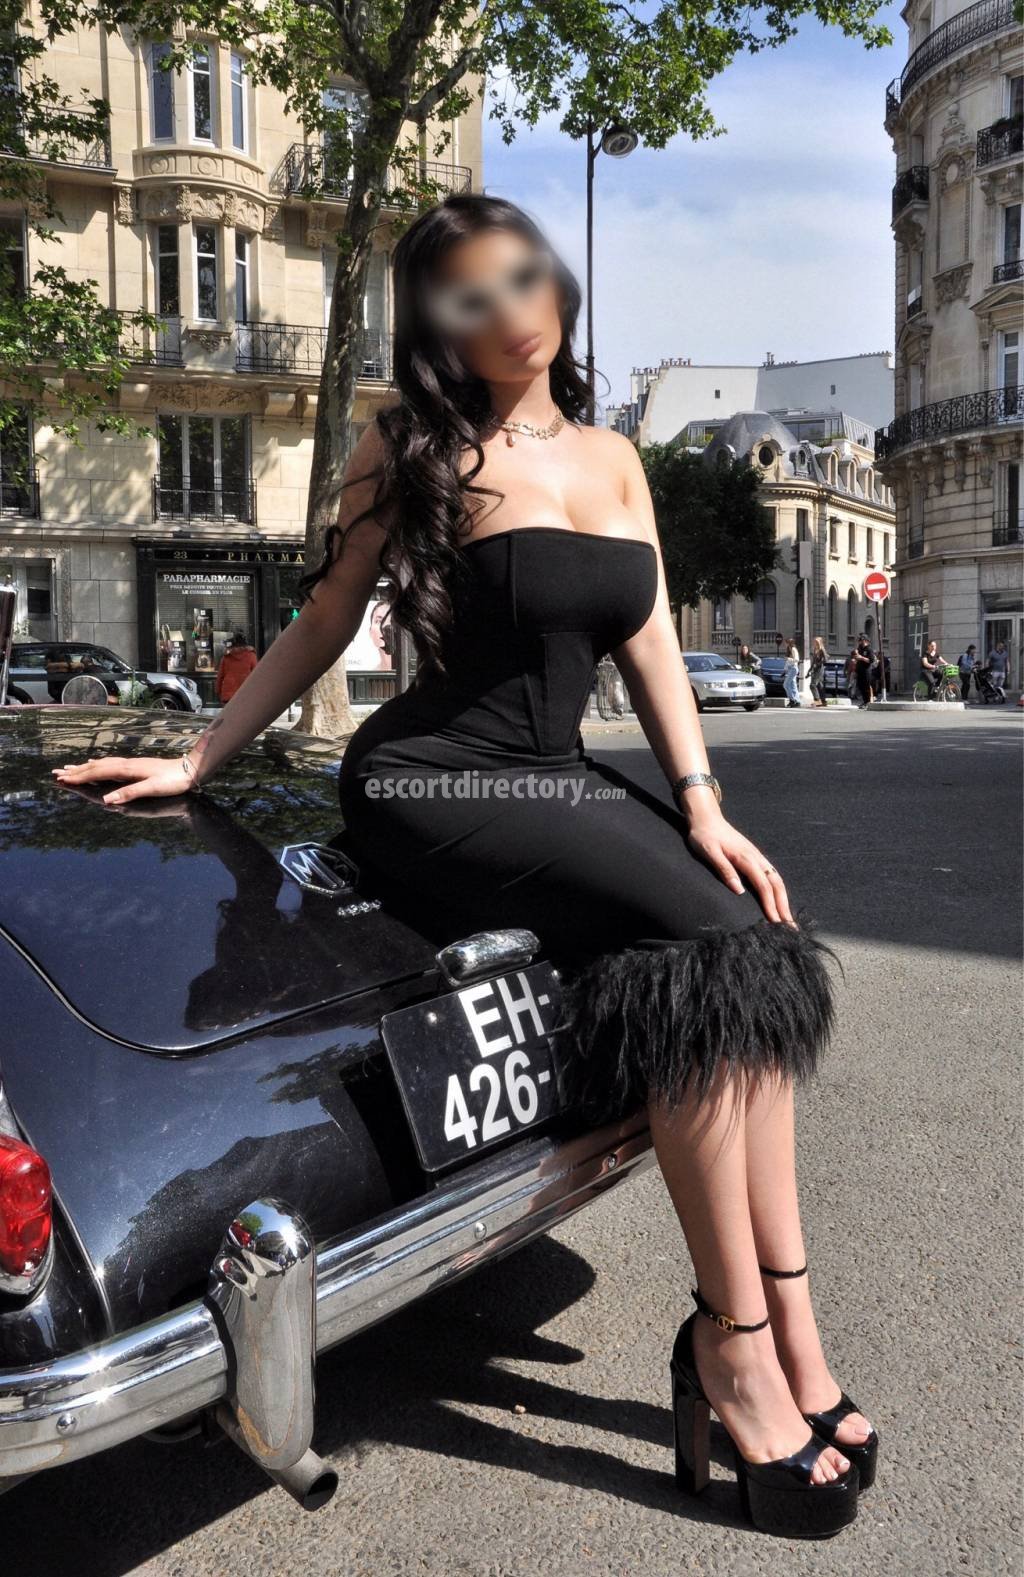 Ayah-Bella Vip Escort escort in Paris offers Cumshot on body (COB) services